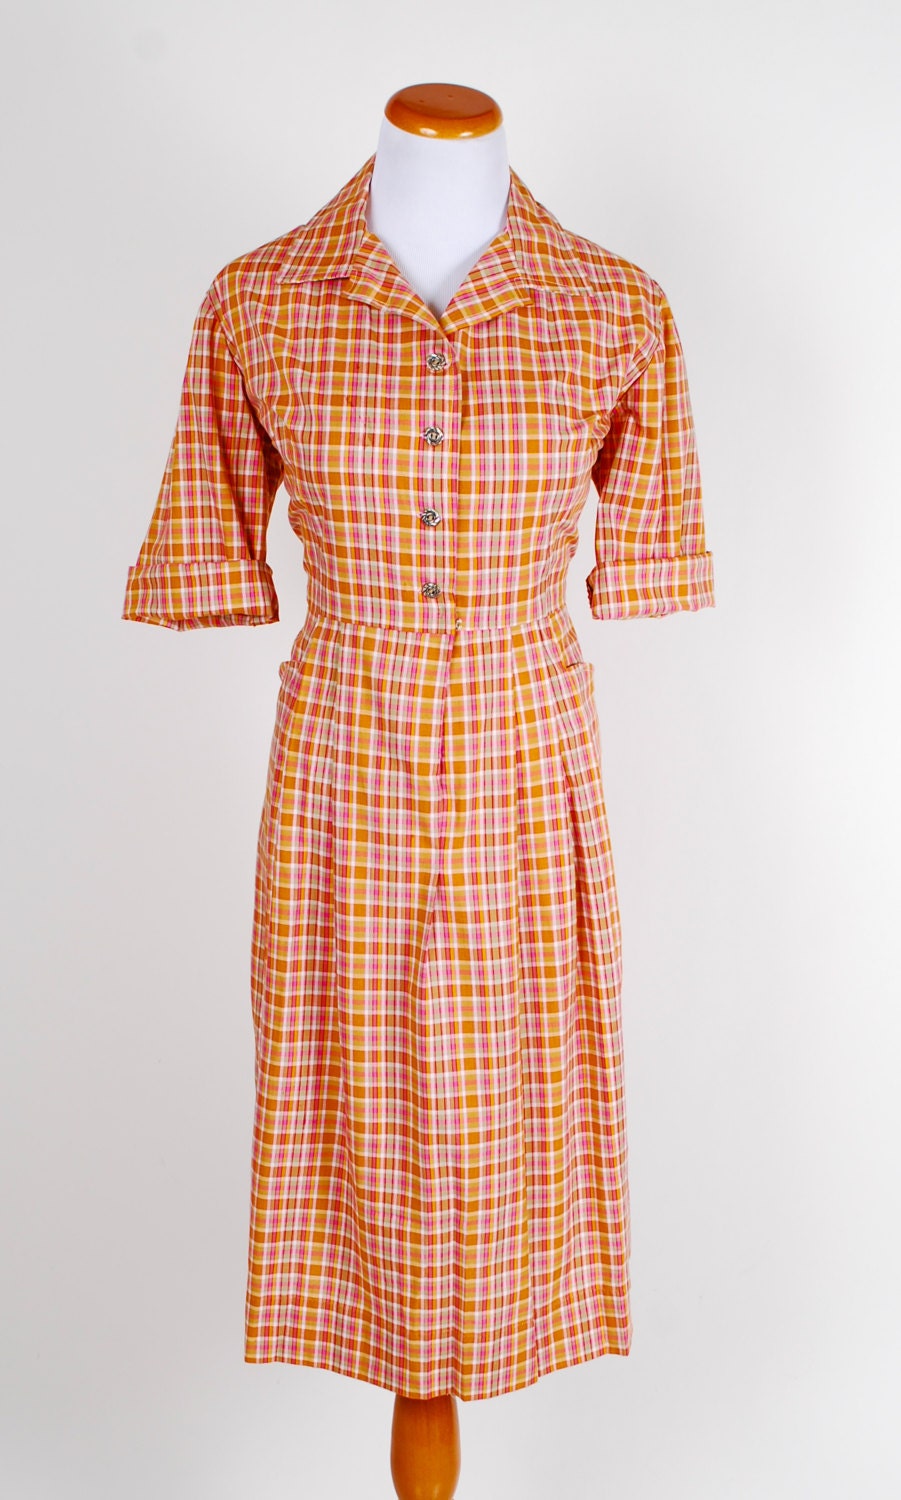 Orange Plaid 50s Day Dress Cotton Collar Short Sleeved